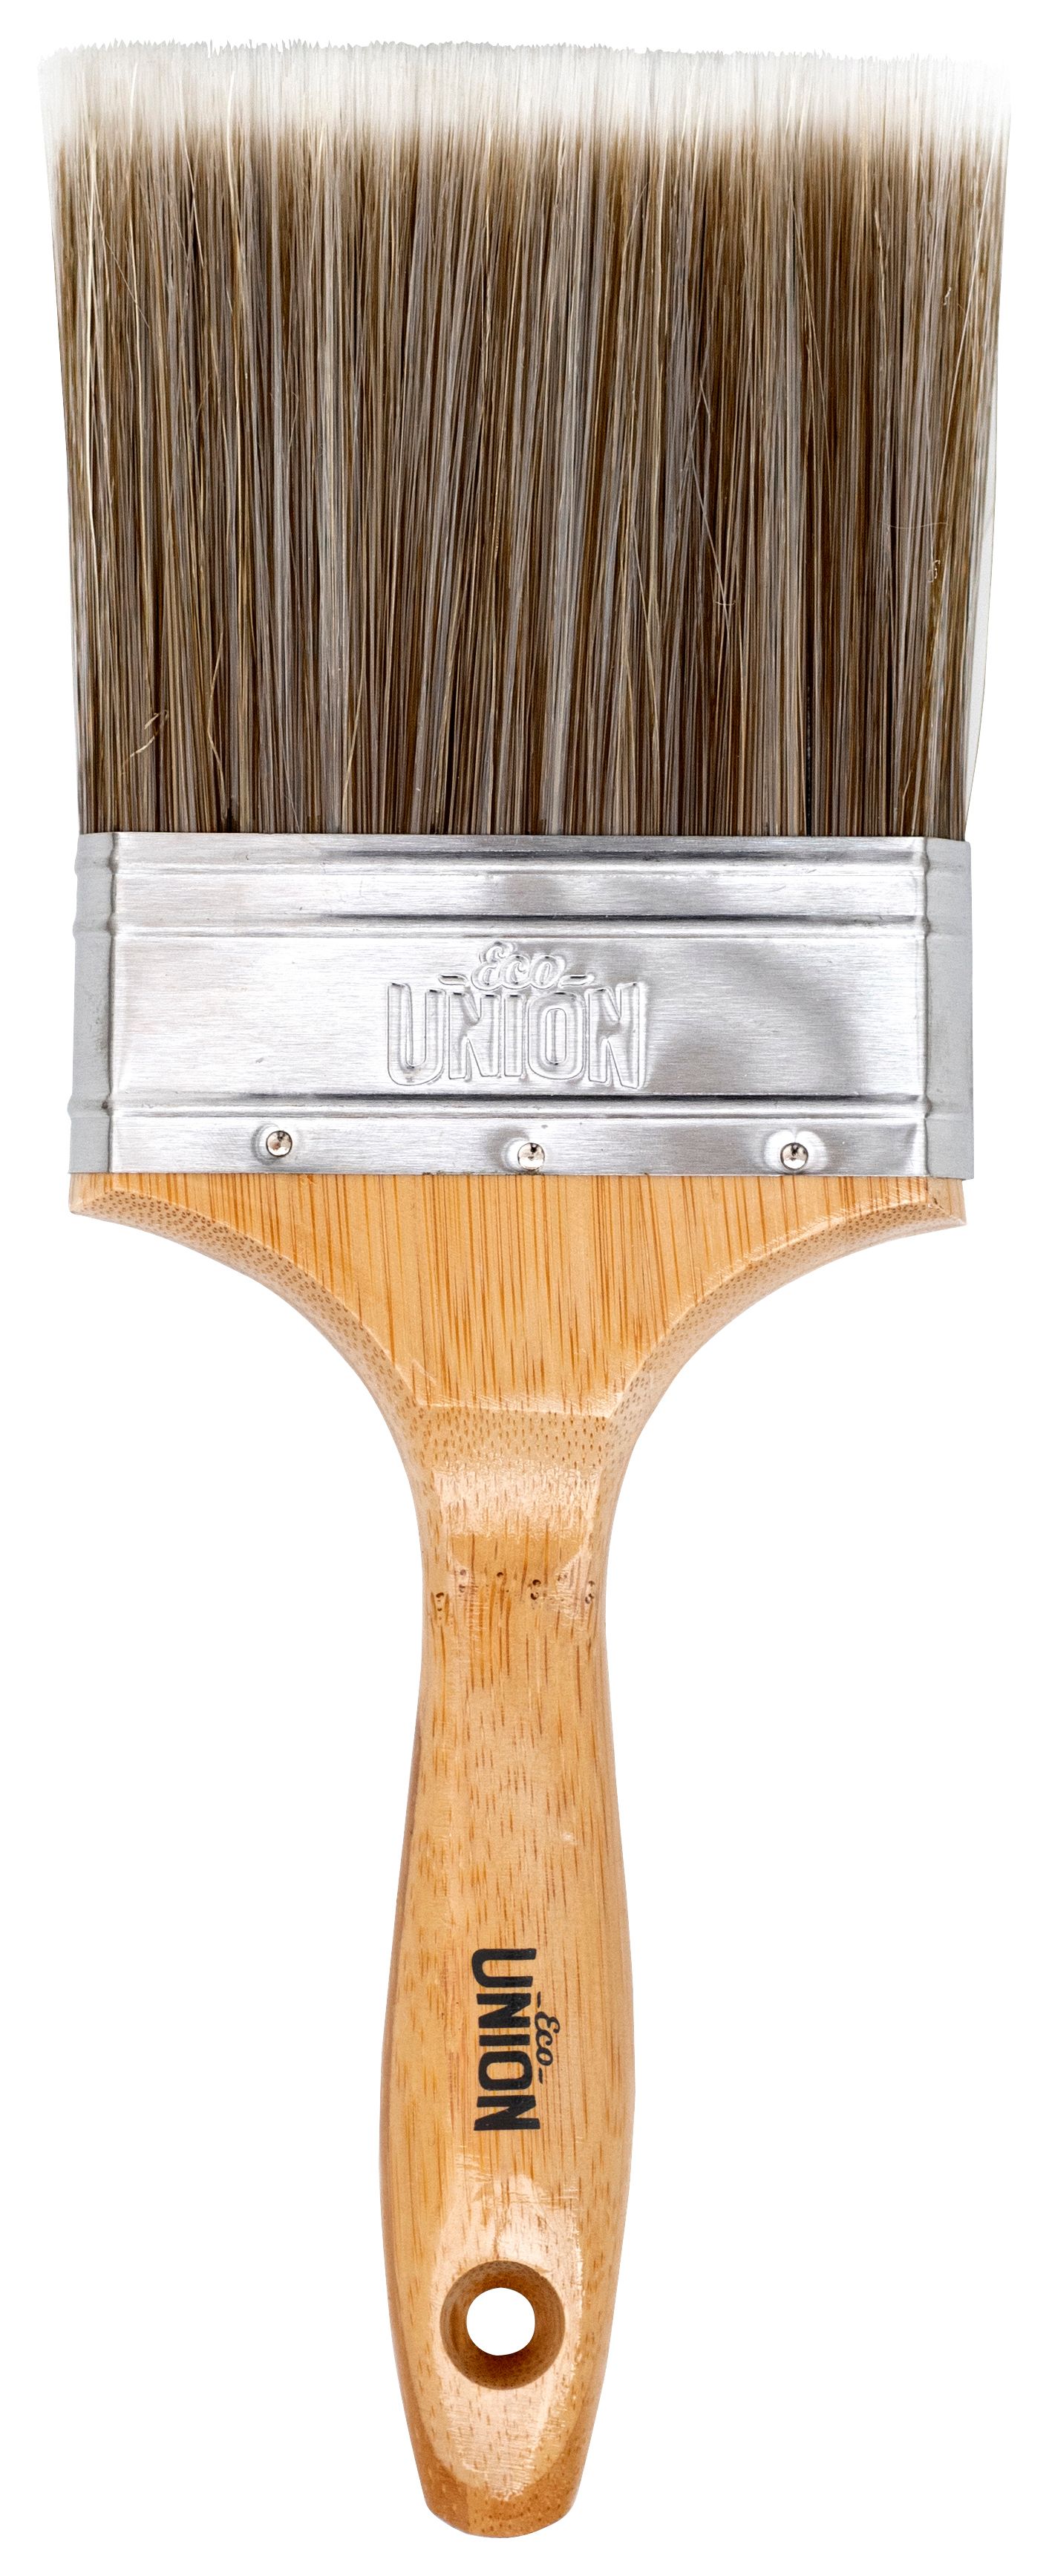 Image of Eco Union Pro Paint Brush - 4in